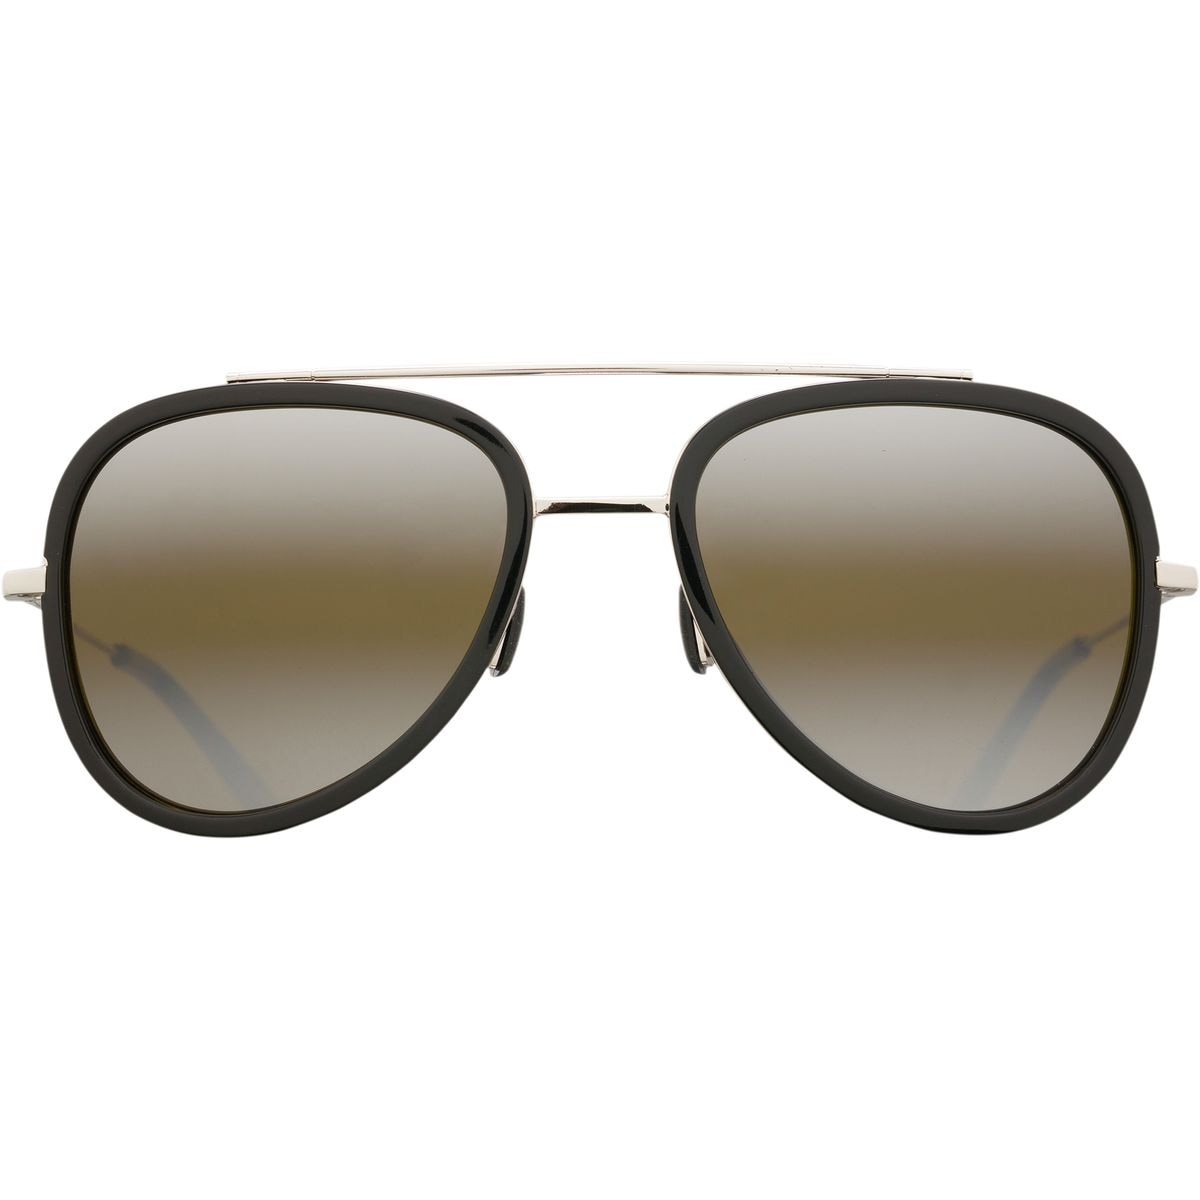 Vuarnet Edge Pilot VL 1614 Sunglasses - Accessories